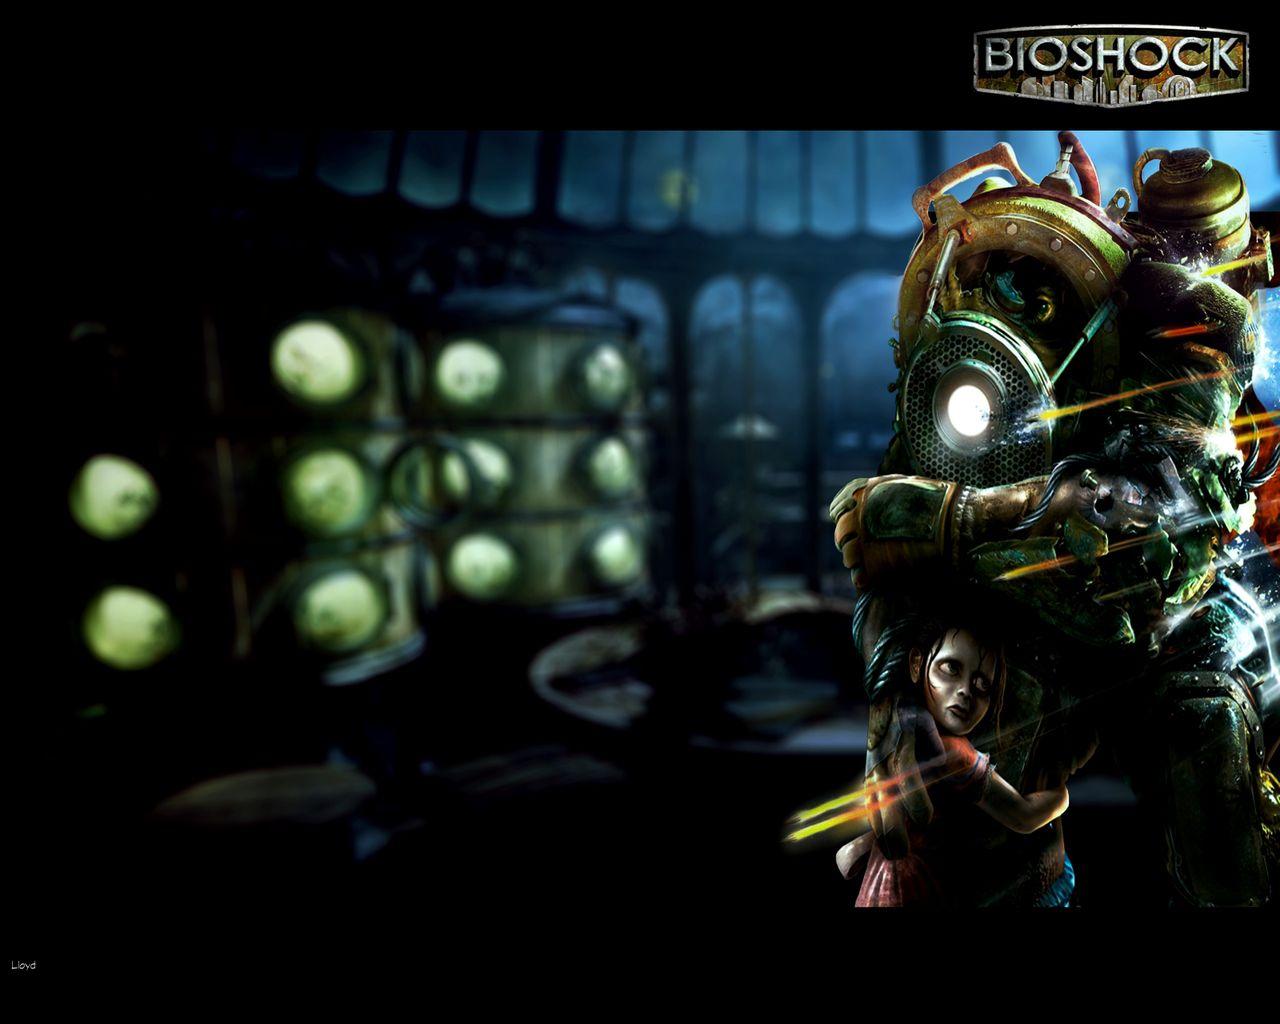 Bioshock 2 Wallpapers Hd 6401 Hd Wallpapers in Games   Imagescicom